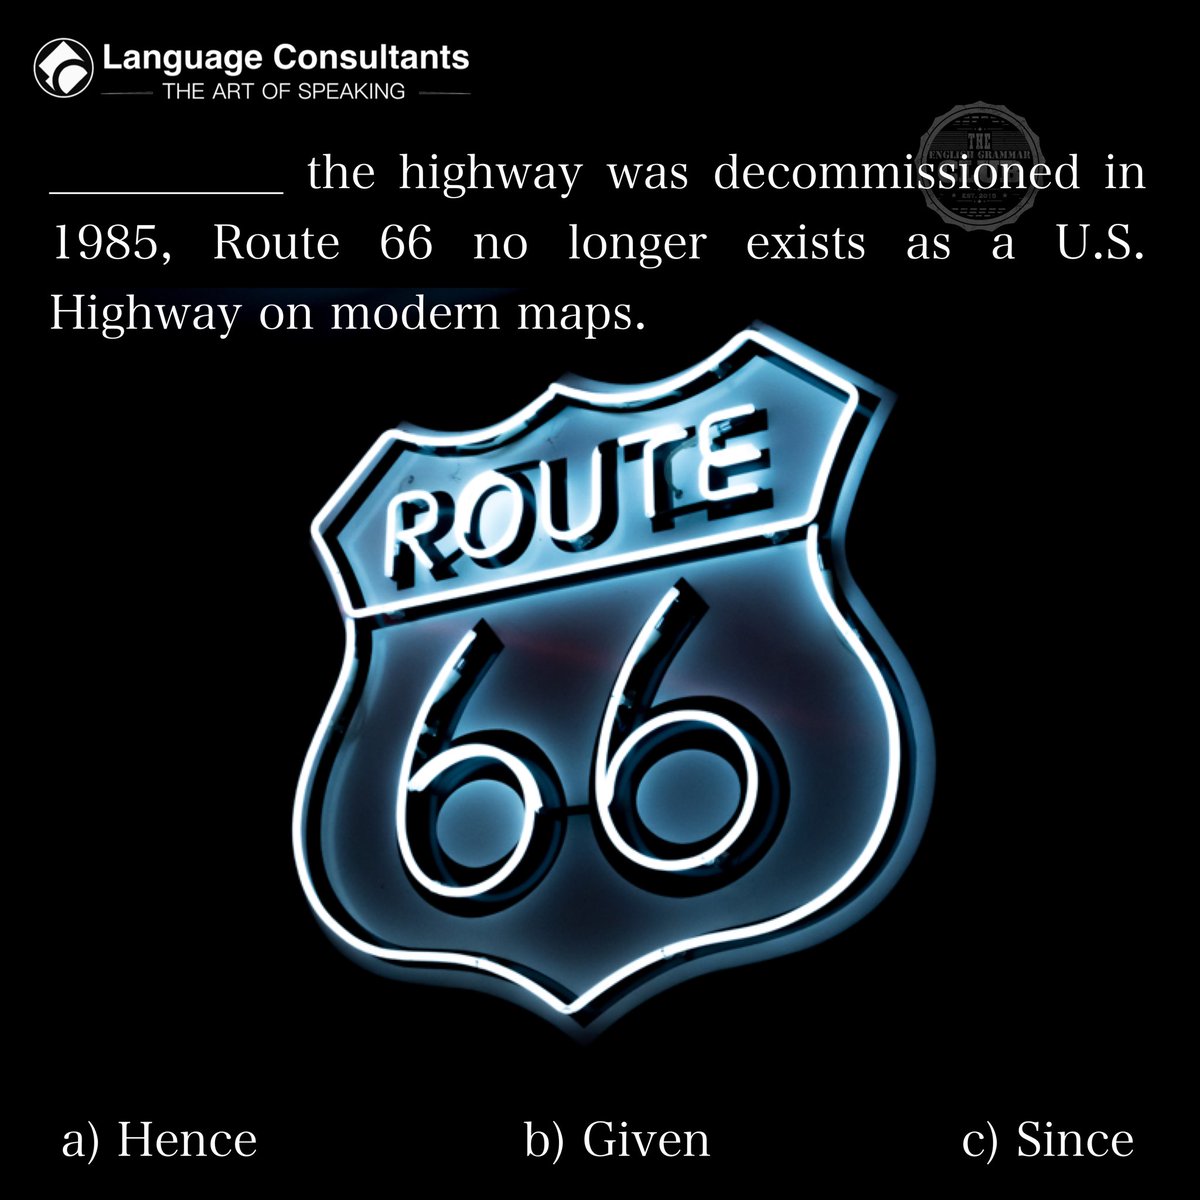 #english 🇬🇧 #englishlearning #learnenglish #languagelearning
#route66 #historicroute66 #roadtrip #usa #america #trip #unitedstates #route66roadtrip